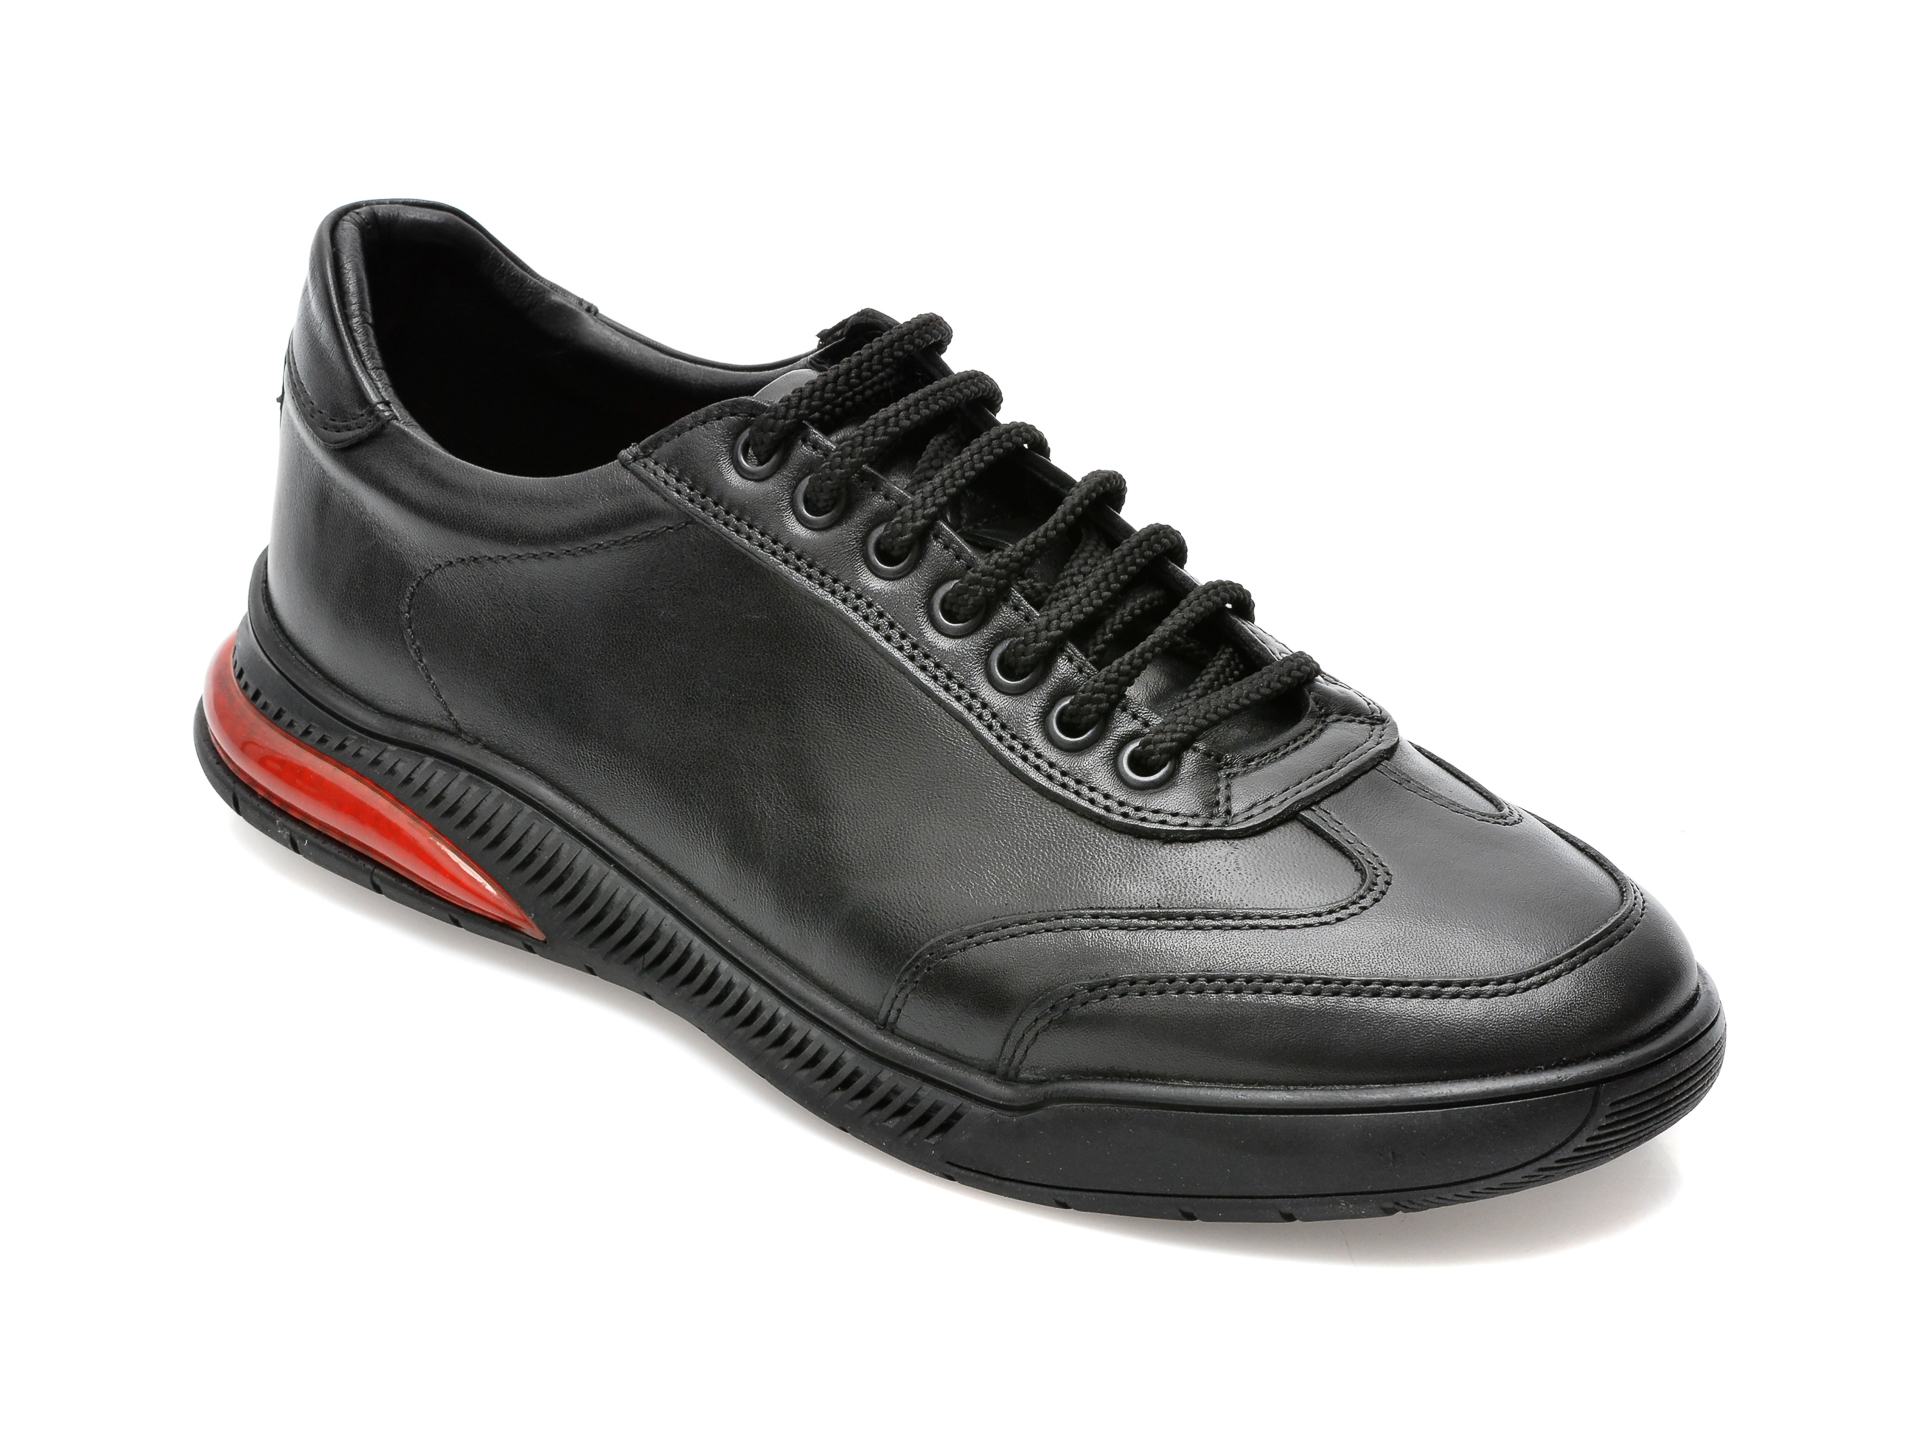 Pantofi OTTER negri, PZN1, din piele naturala /barbati/pantofi